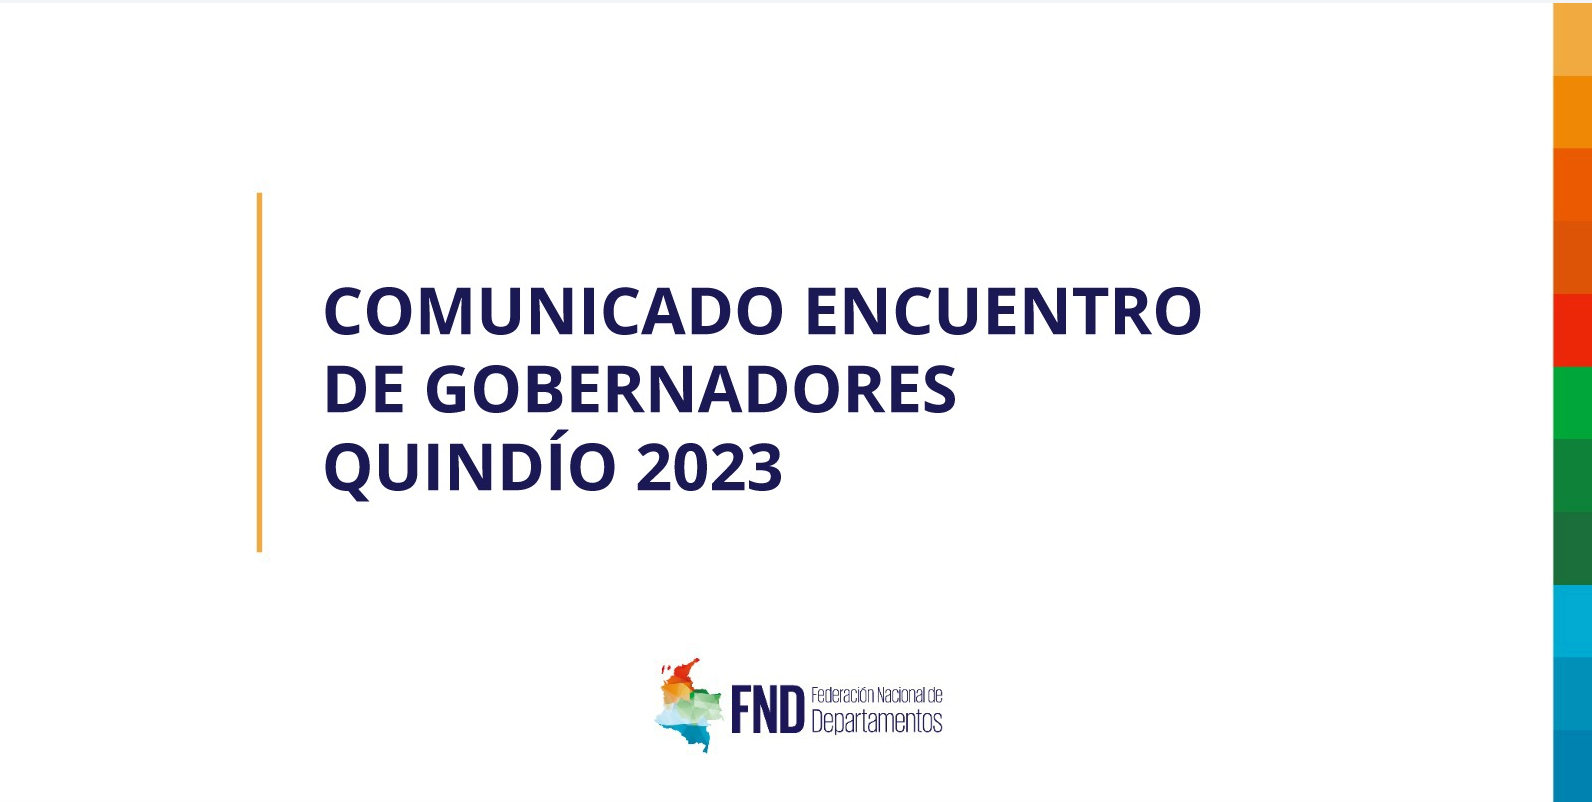 Comunicado Encuentro de Gobernadores Quindío 2023